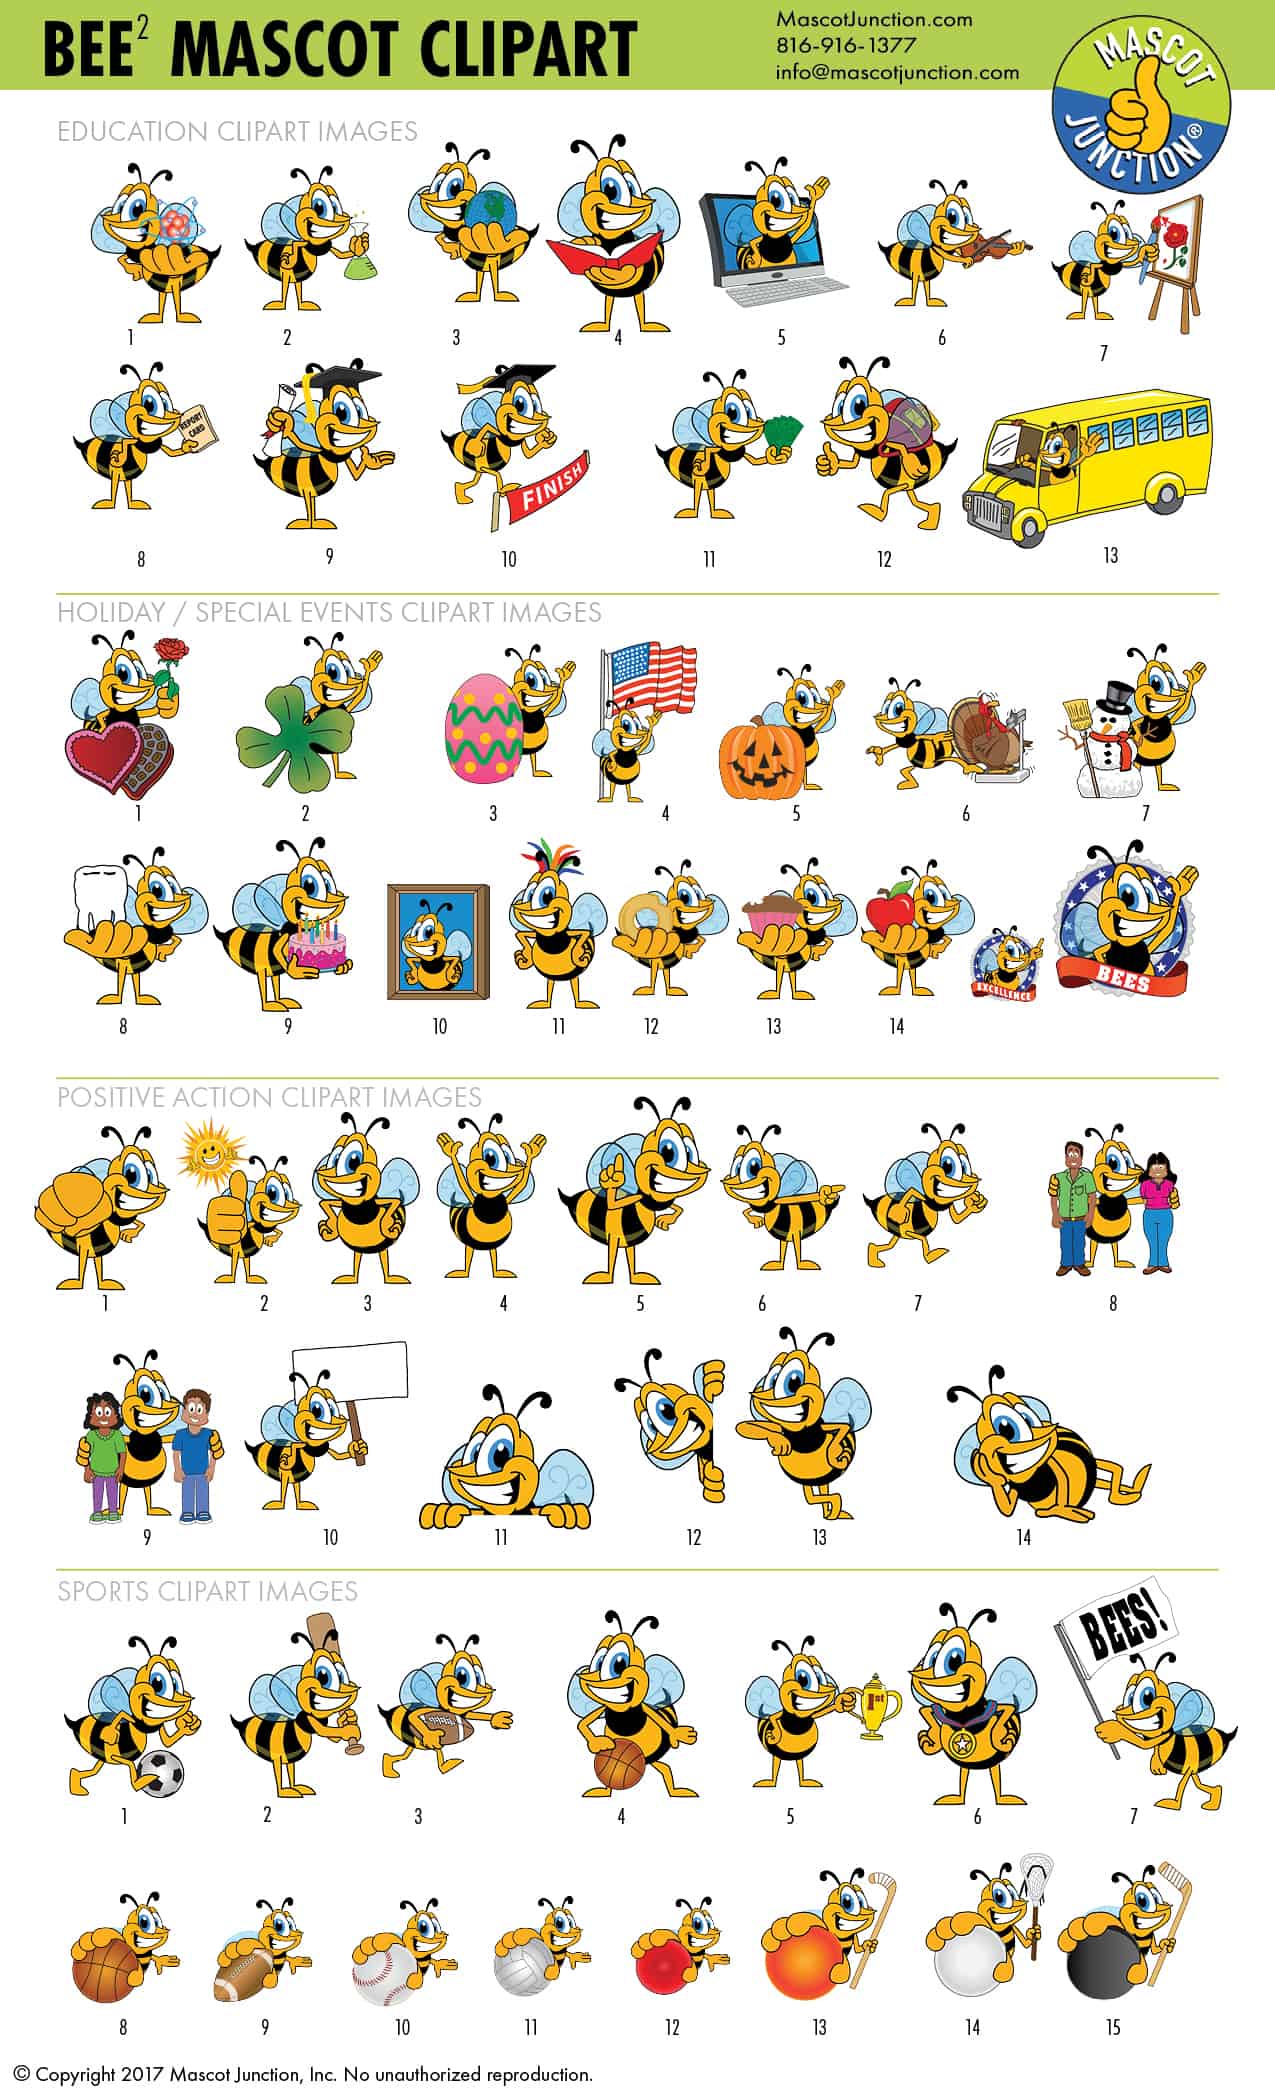 Bee Mascot Clipart Image Set